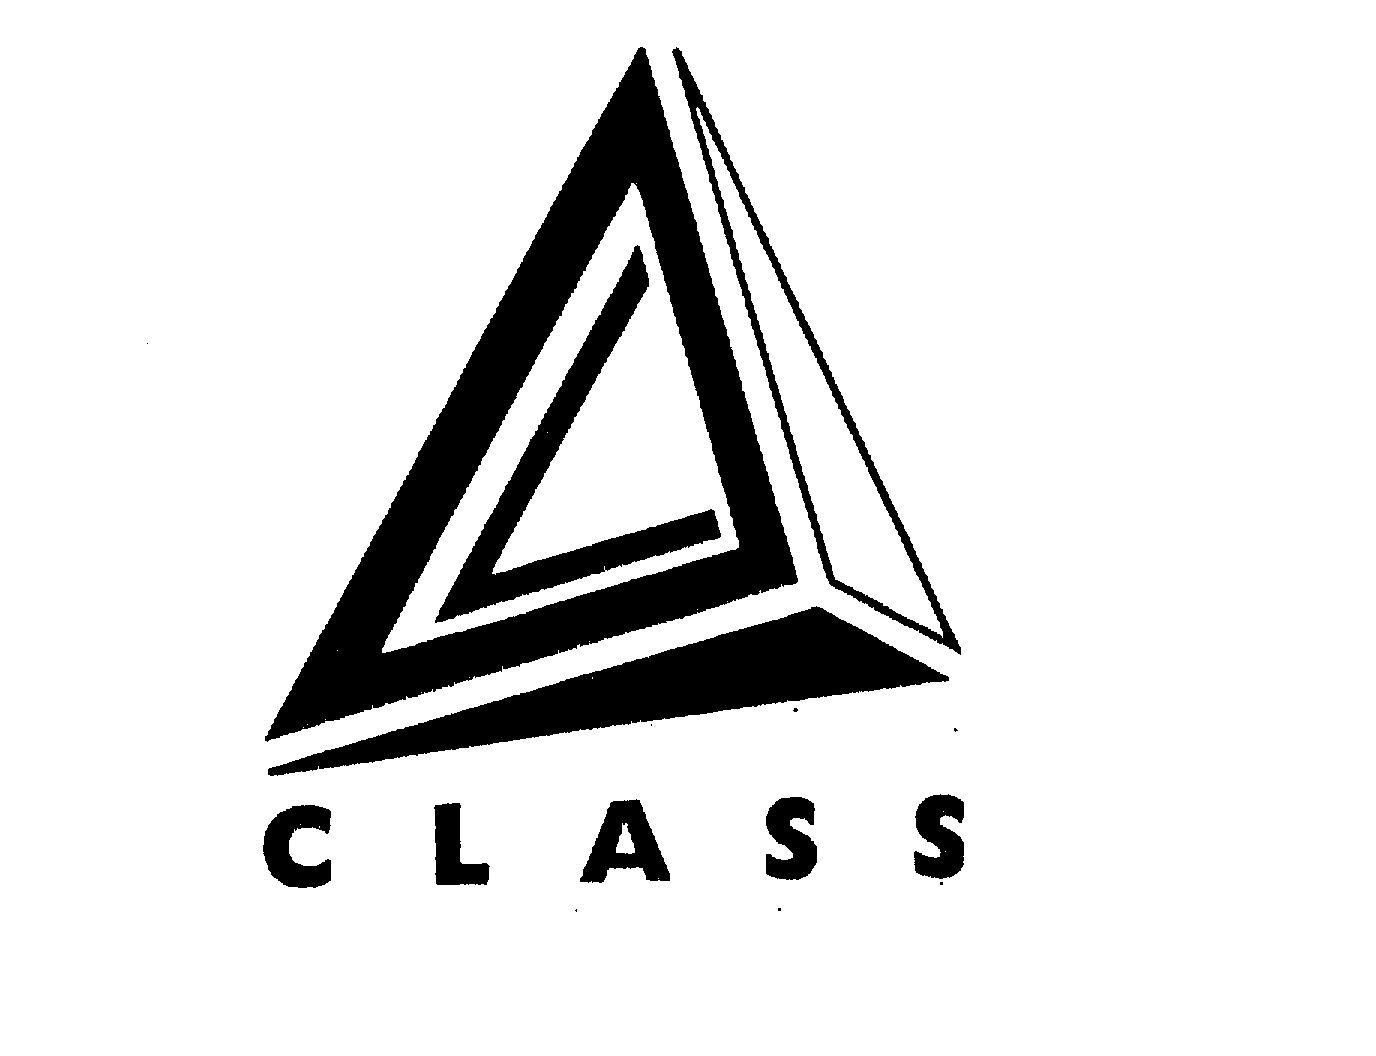 CLASS